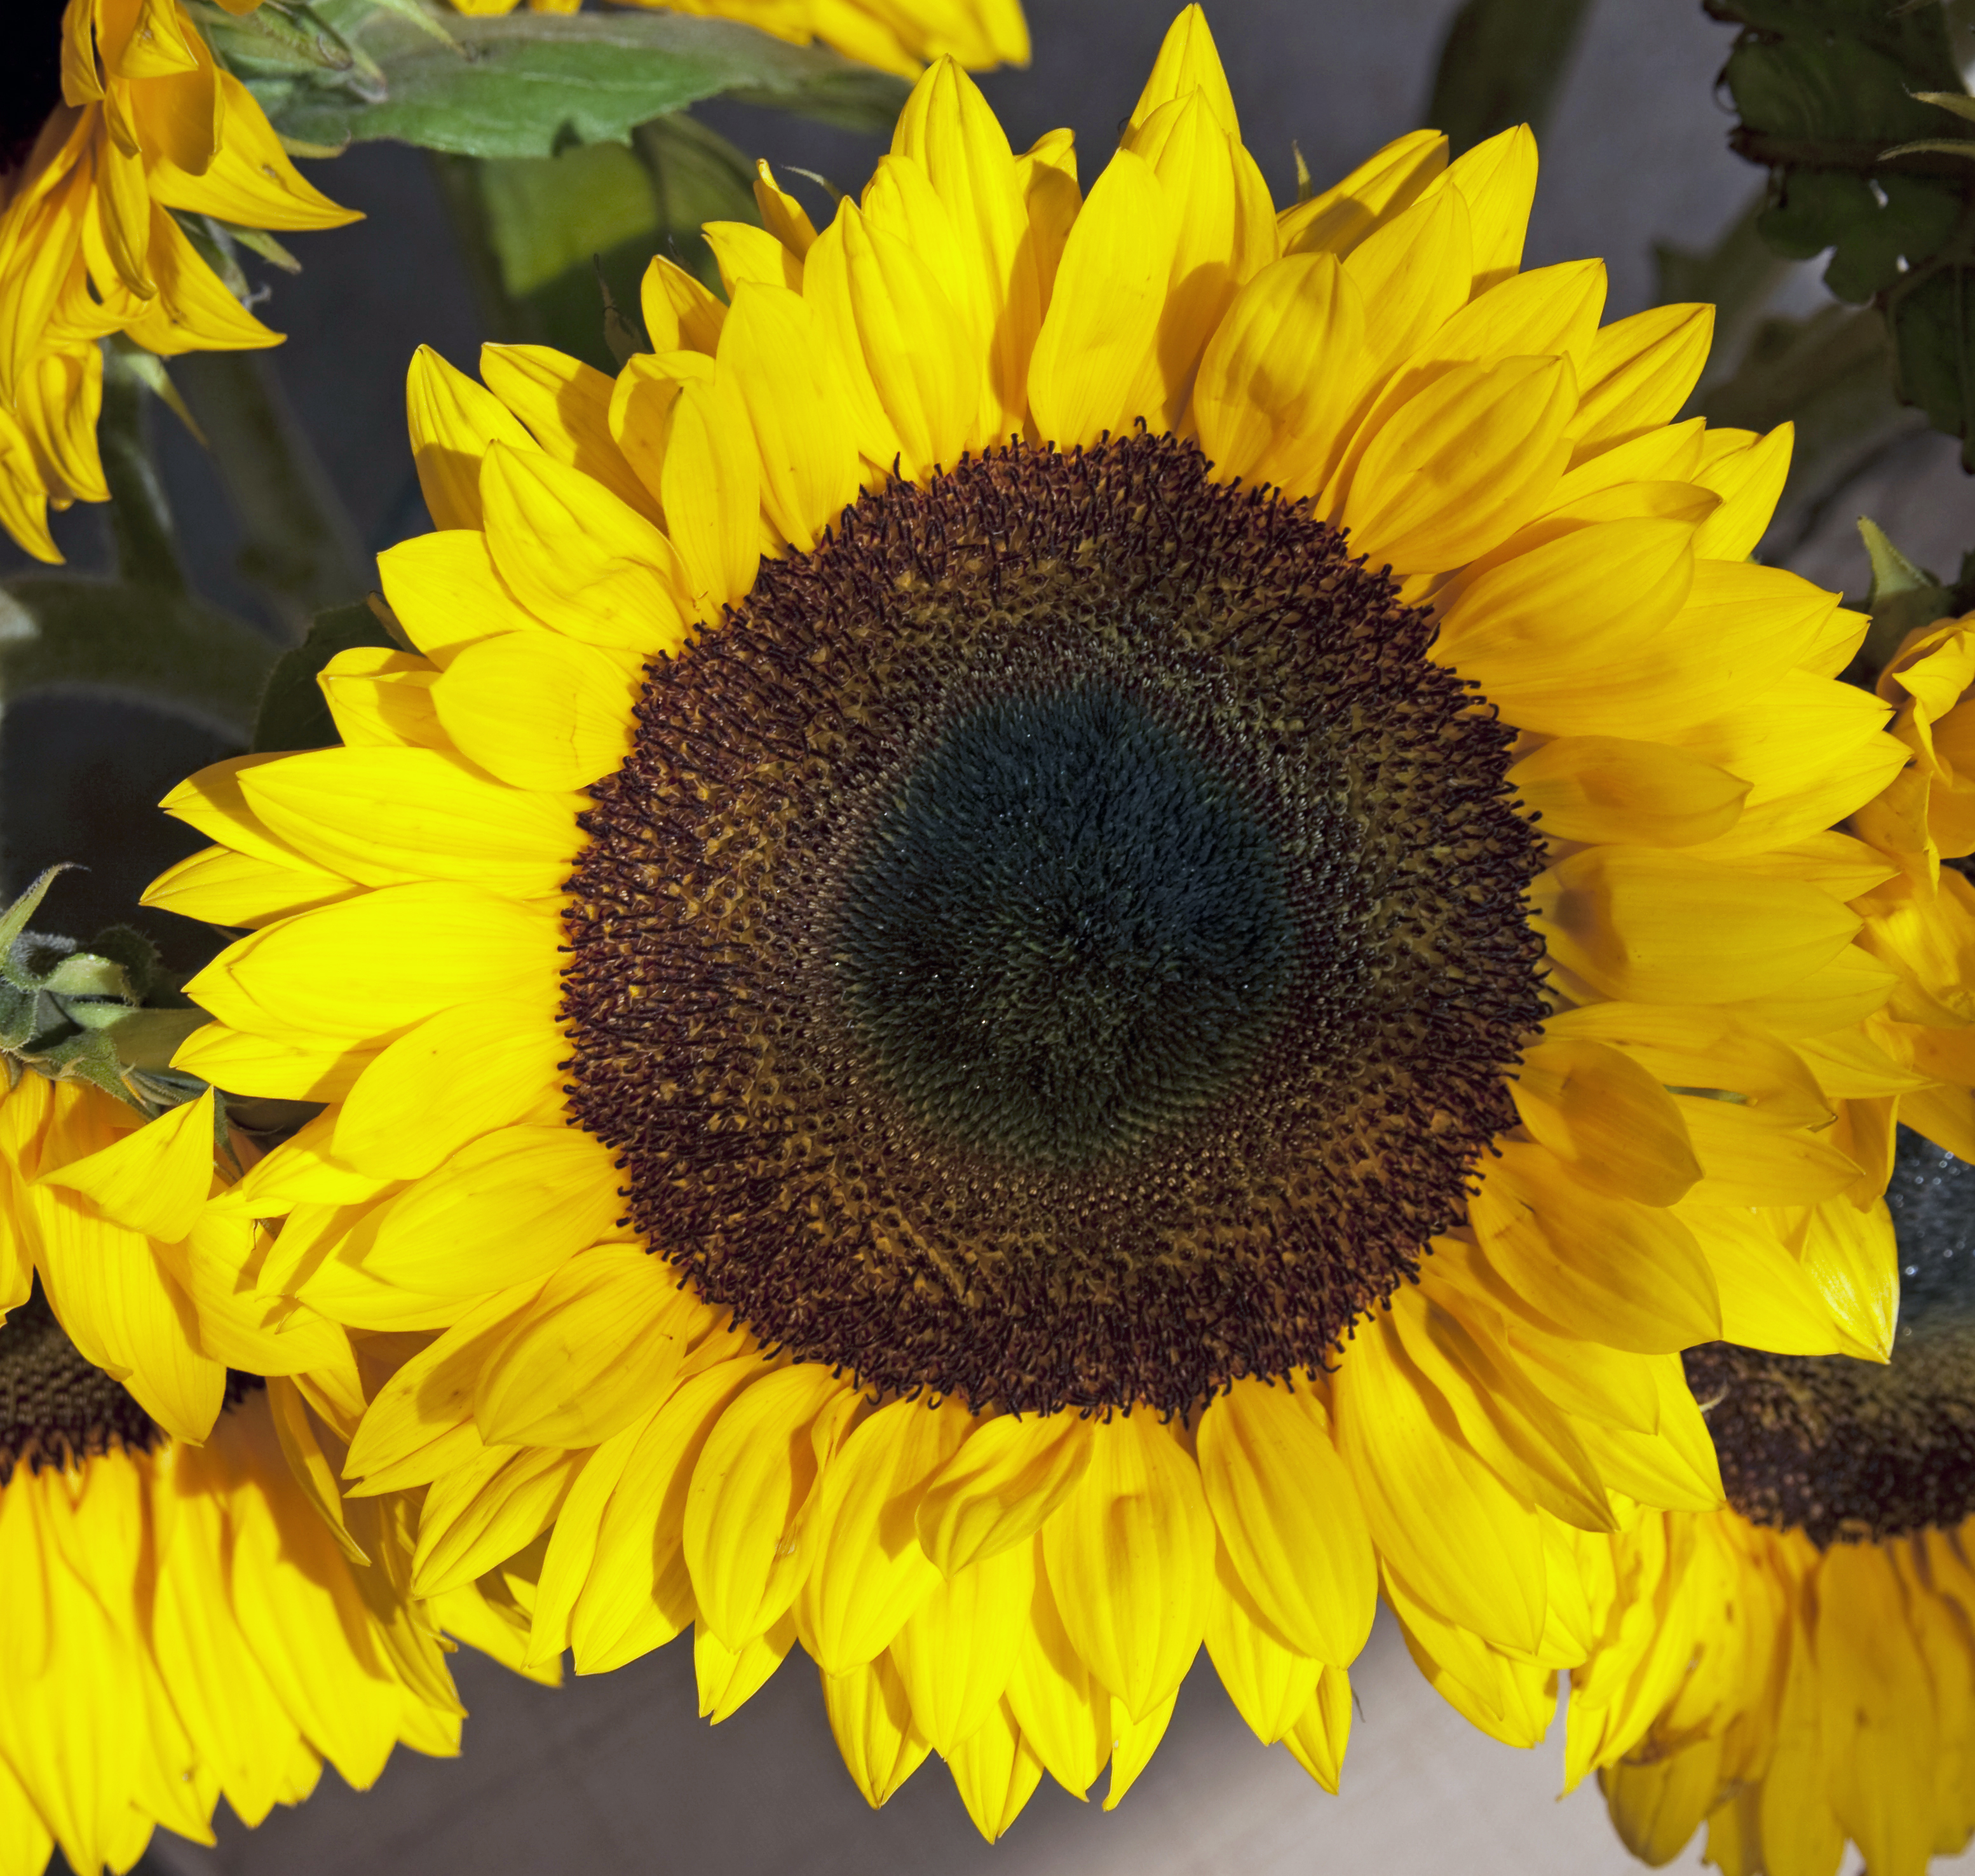 Sunflower 1 (3889973450)